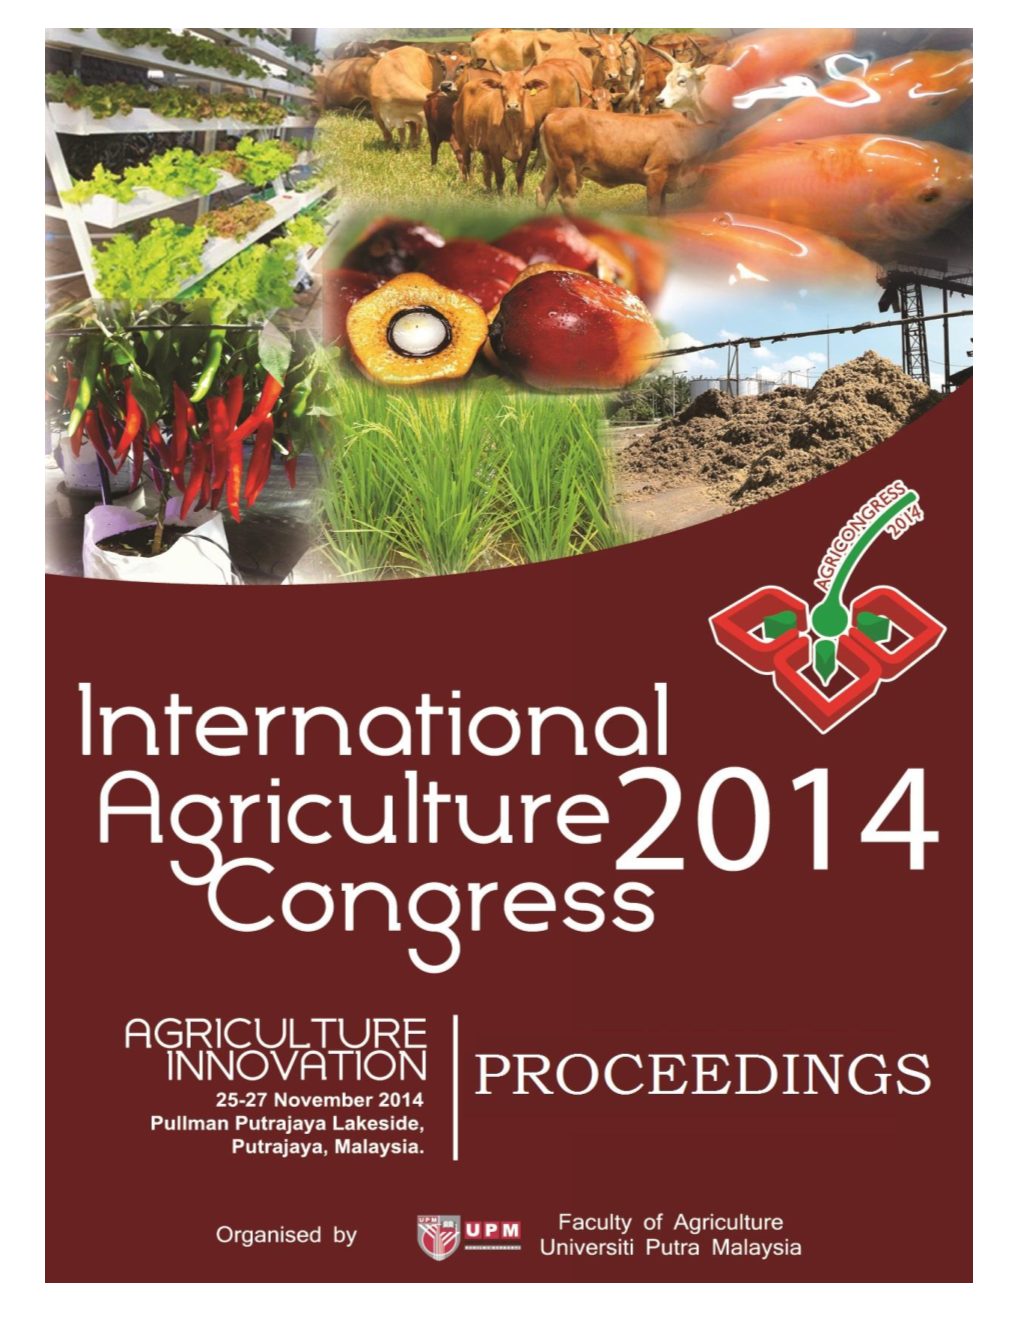 International Agriculture Congress 2014 Pullman Putrajaya Lakeside, Putrajaya, Malaysia 25-27 November 2014 0